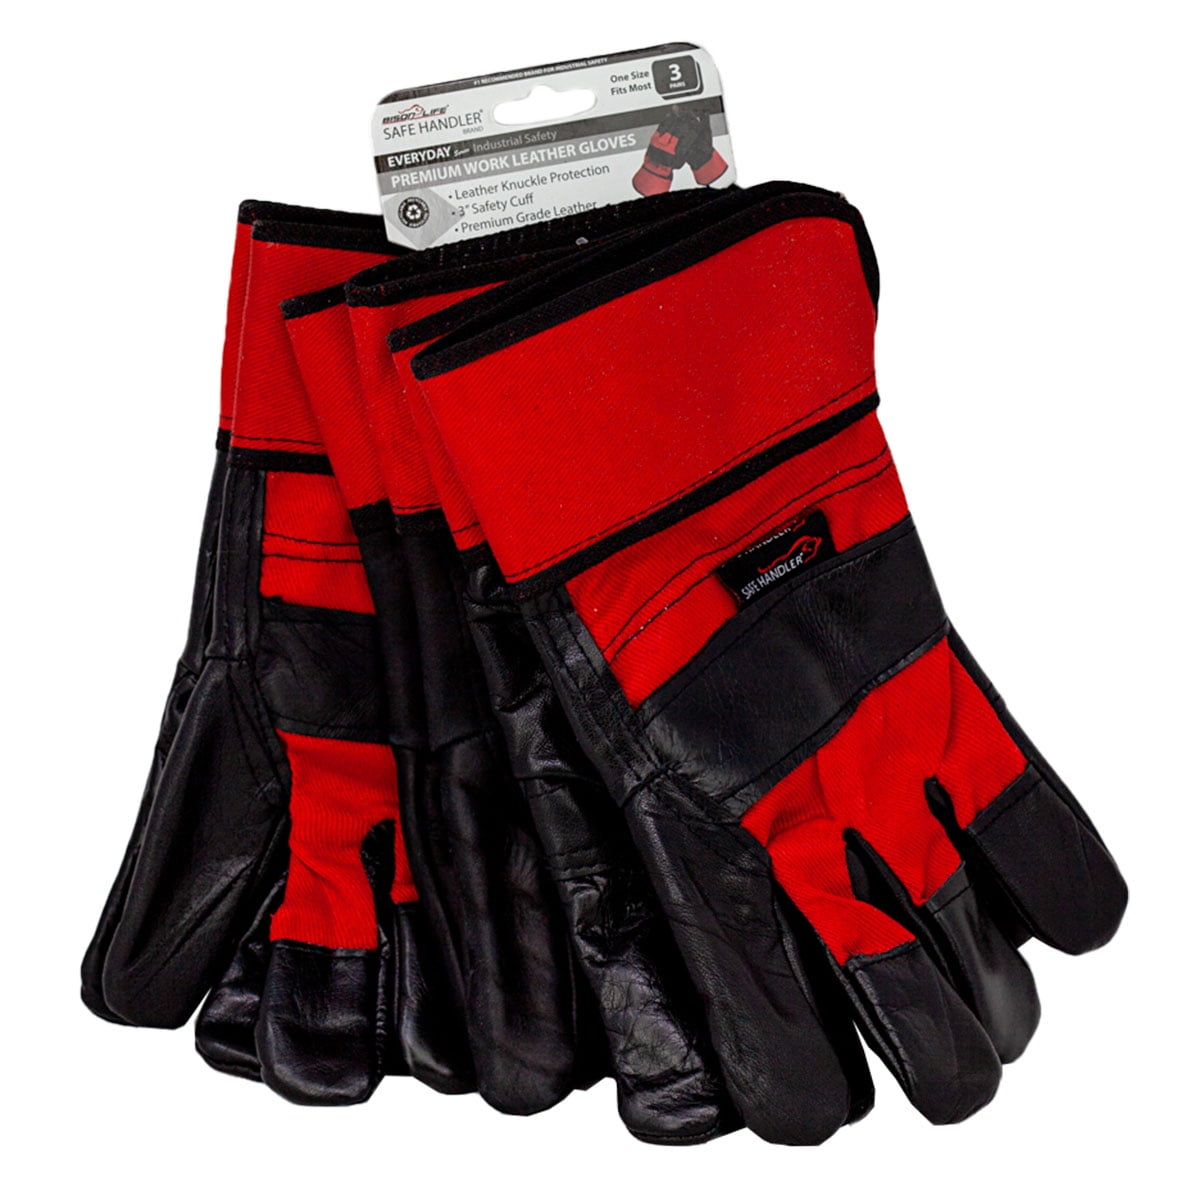 Cool Cotton Lined Backing SAFE HANDLER Work Leather Gloves Lightweight & Versatile Split Leather Safety Cuff Work Gloves 3 Pack 